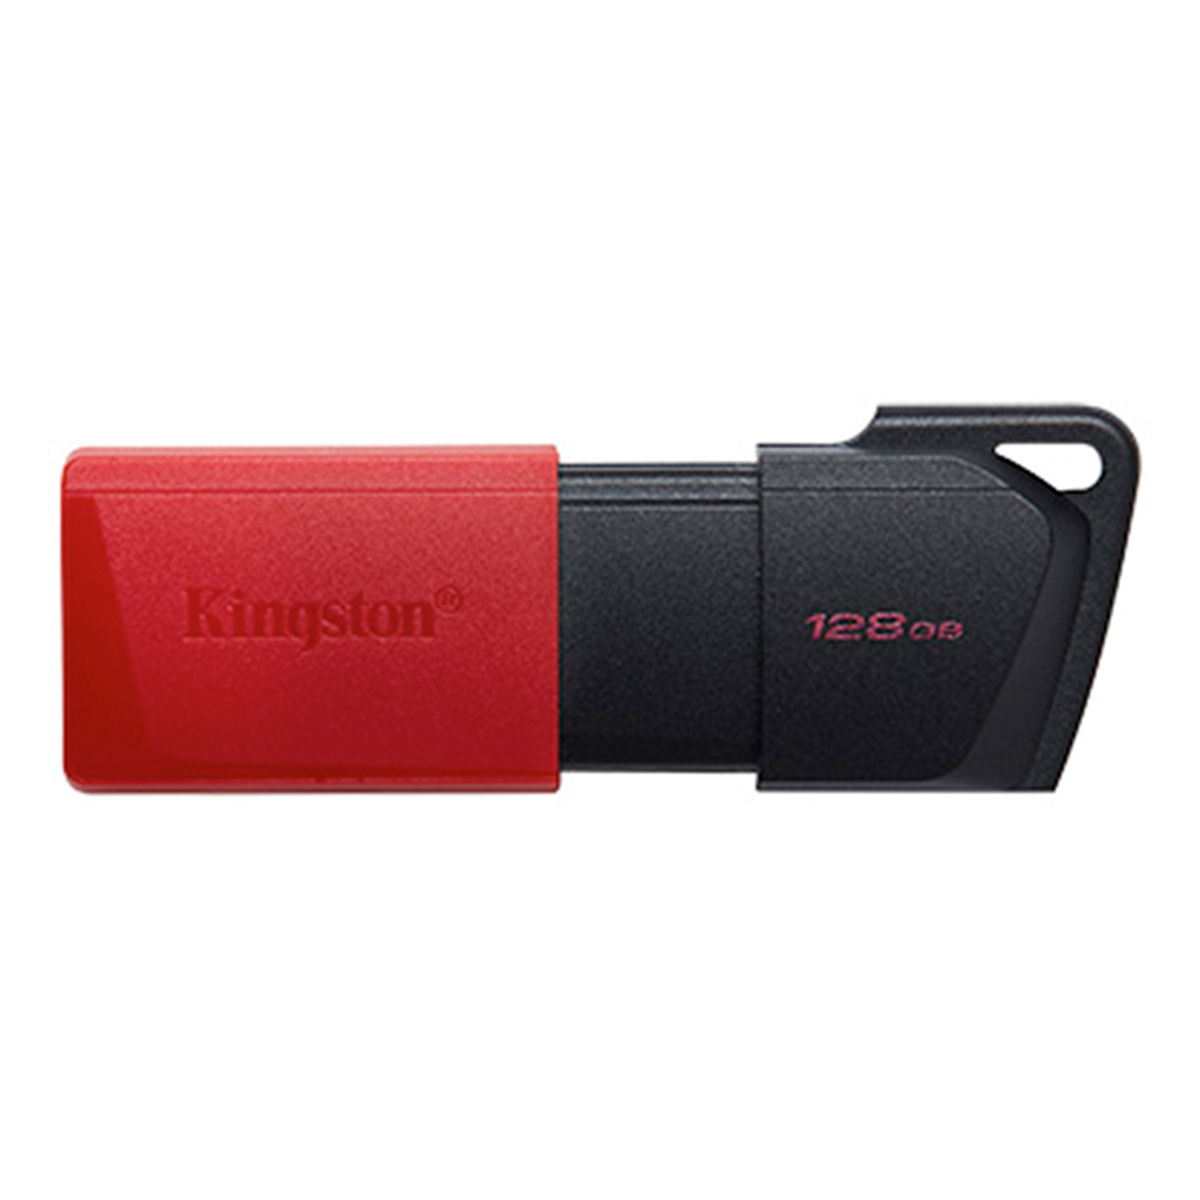 KINGSTON USB 3.2 DTXM 128GB